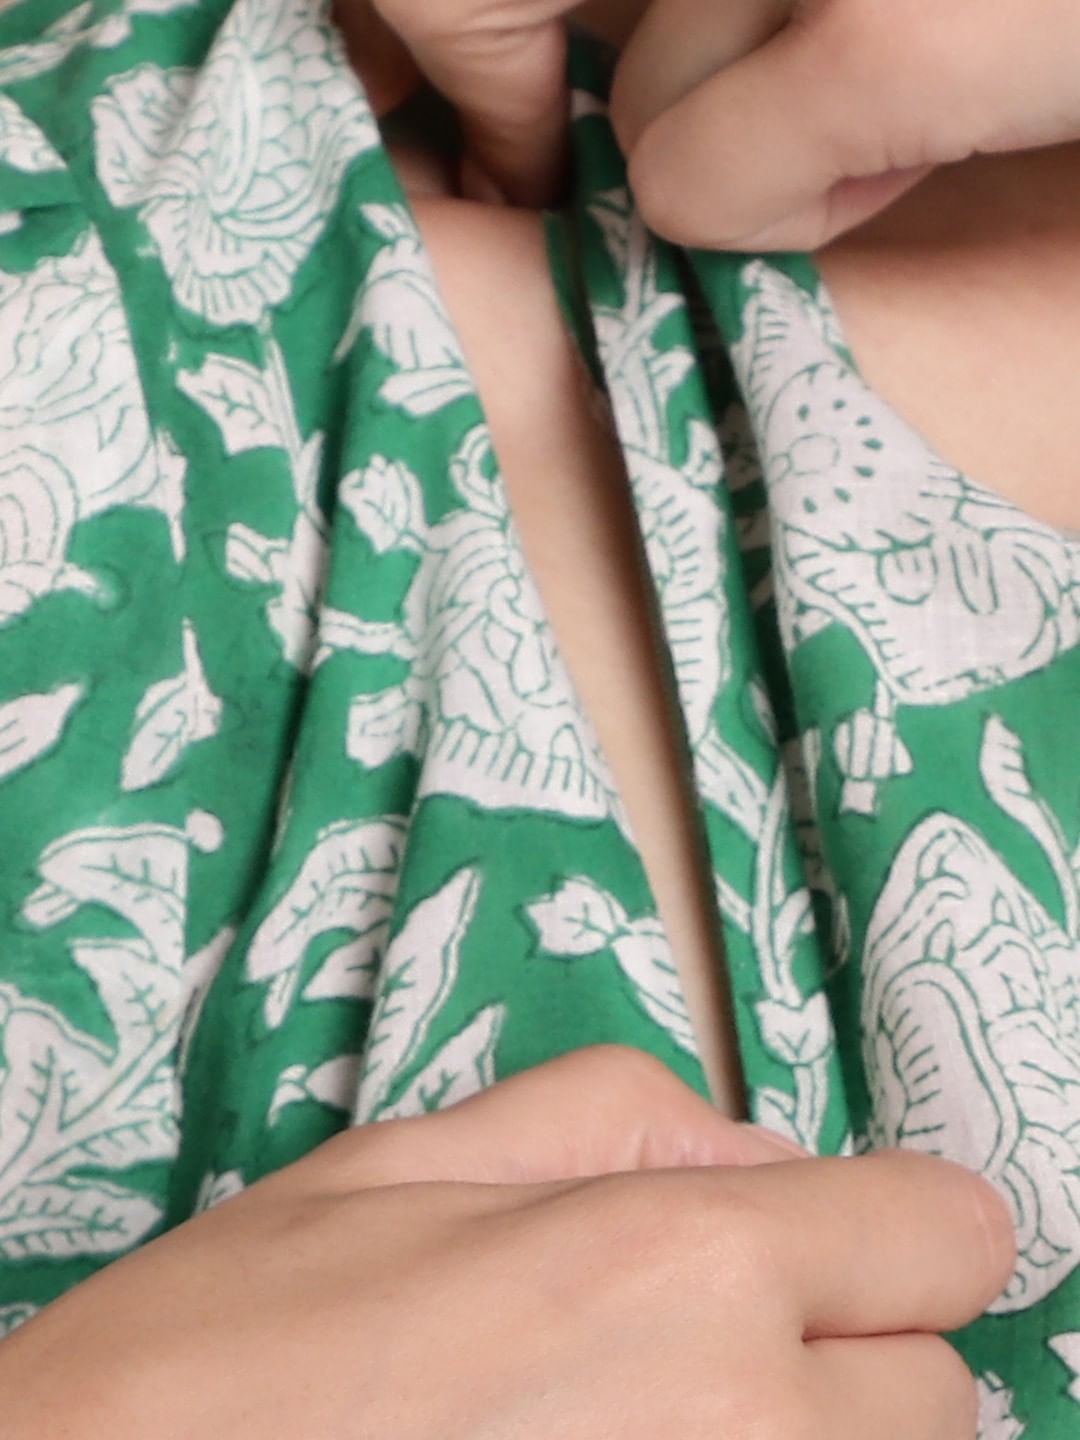 Green Floral Block Print Maternity Dress